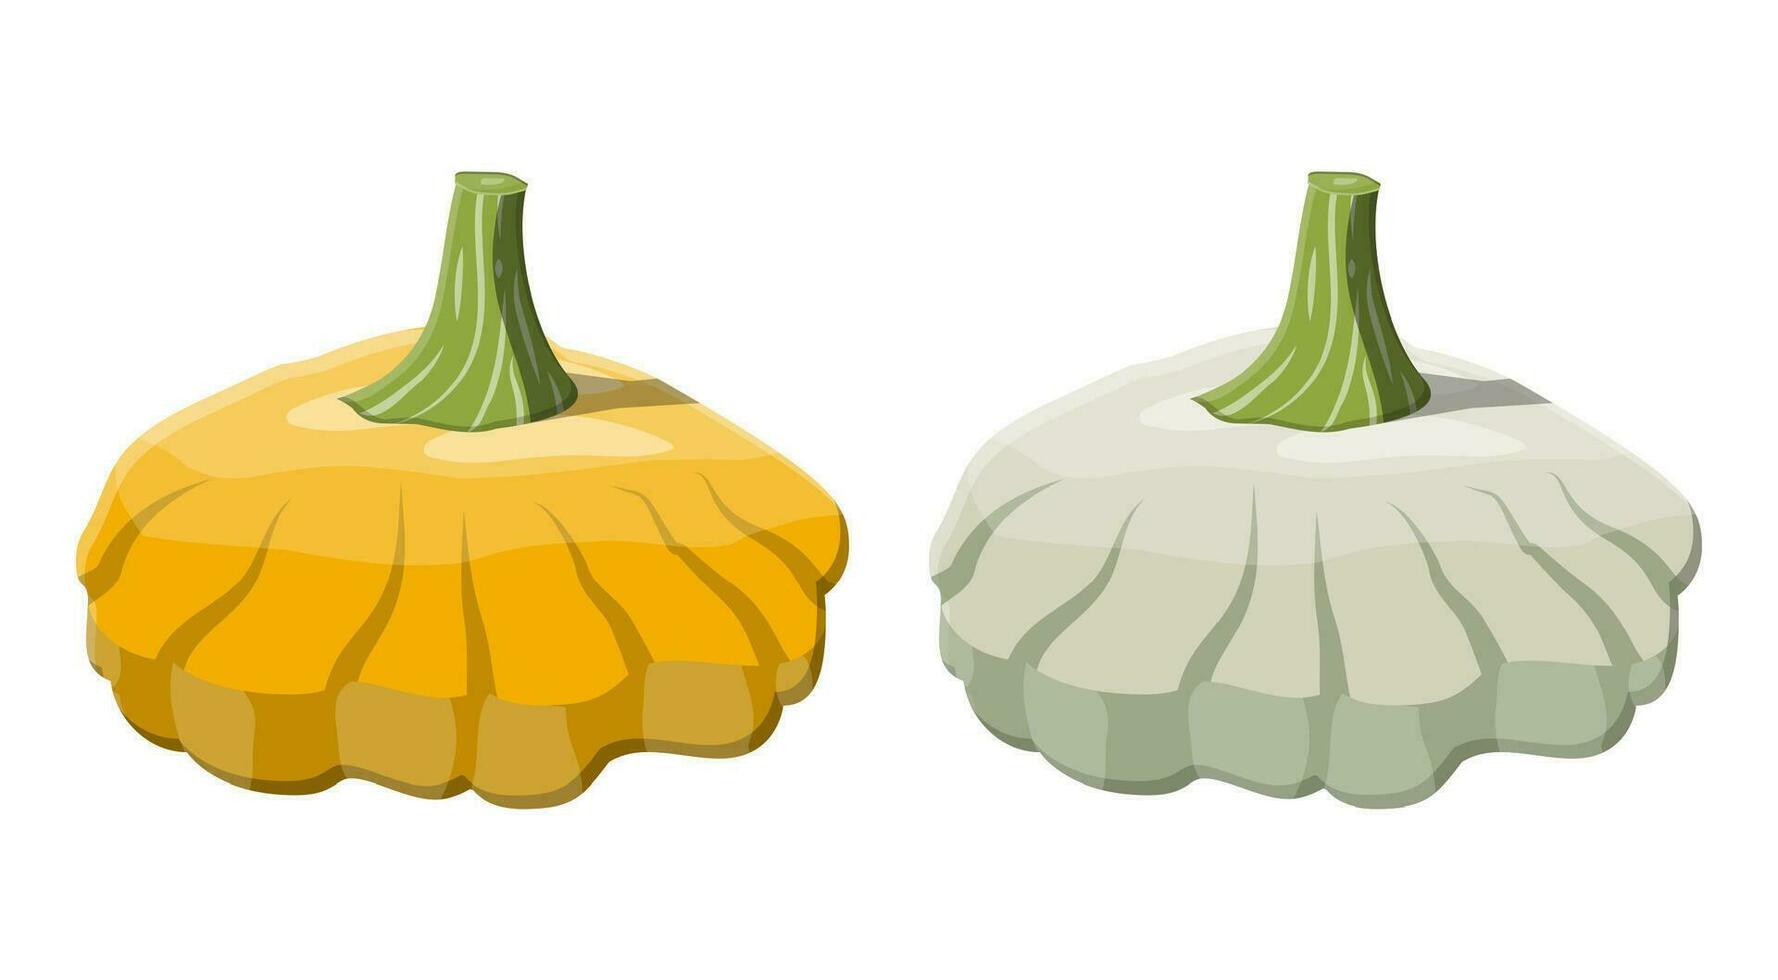 Orange and green bush pumpkin vegetable. Patisson pumpkin isolated on white background. Autumn harvest. Vector illustration in flat style